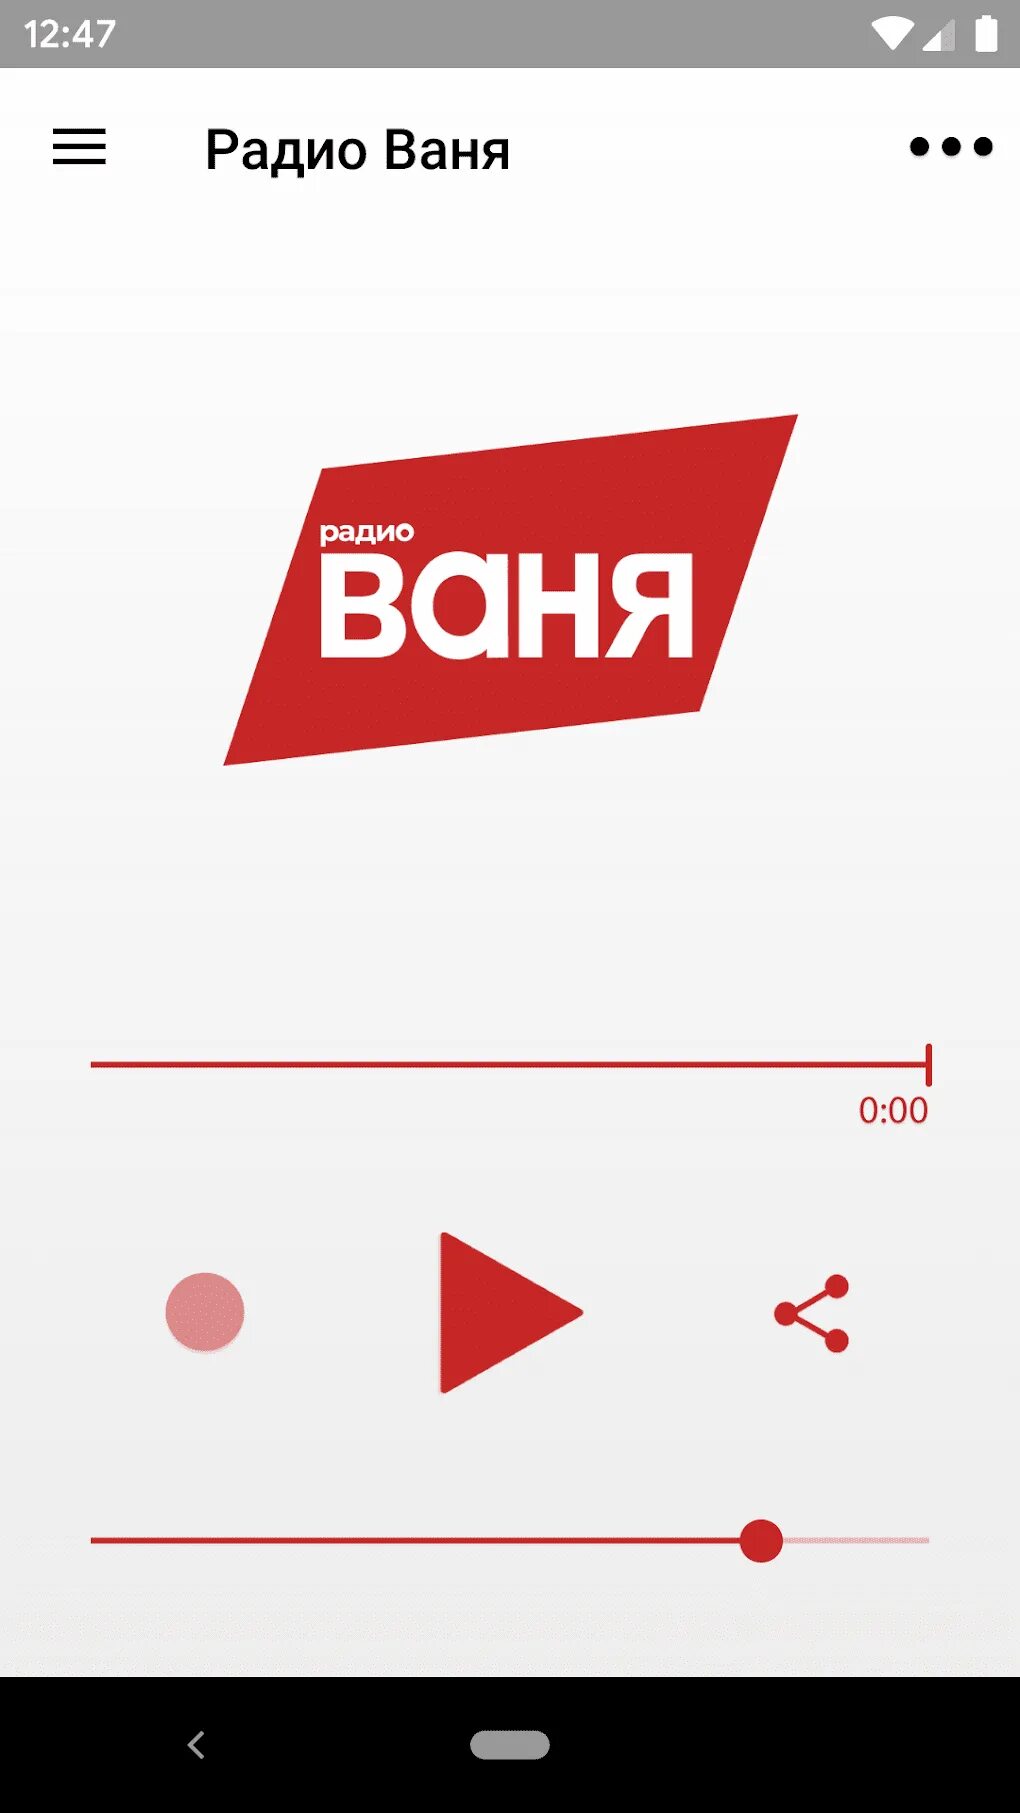 Радио Ваня. Плейлист радио Ваня. Радио Ваня Москва. Радио Ваня Челябинск.